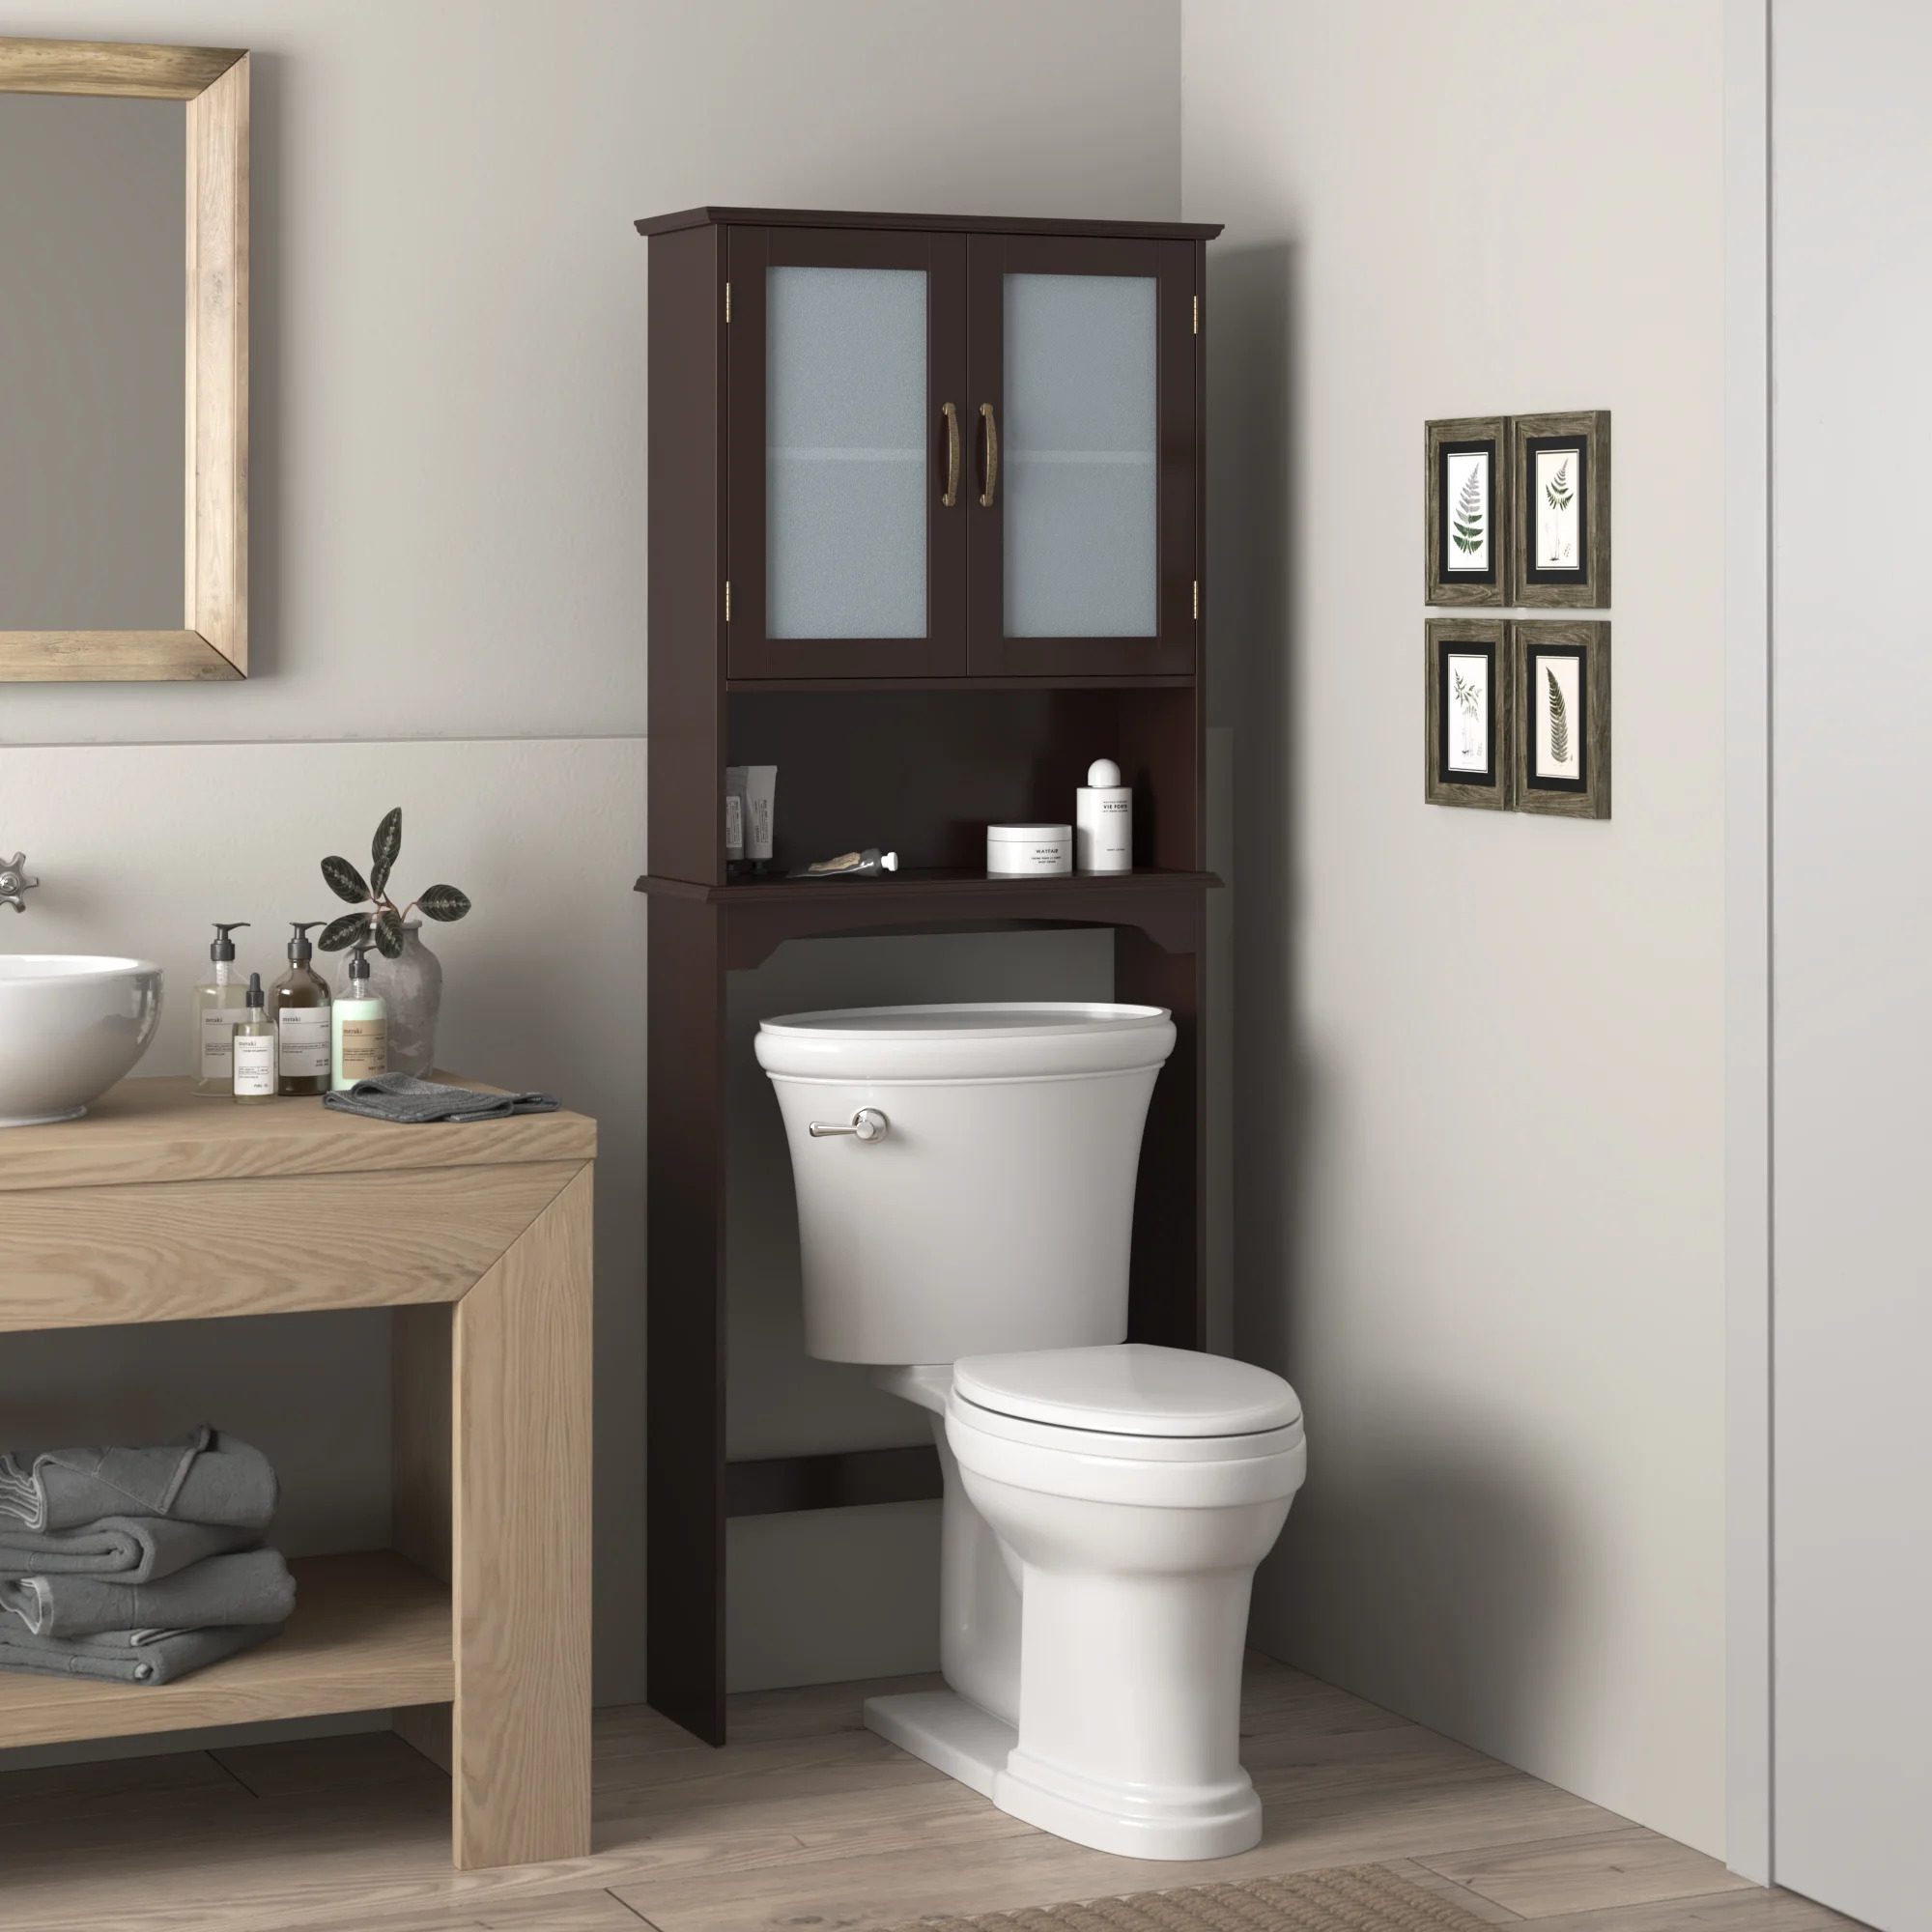 20 Genius Small Bathroom Storage Ideas 